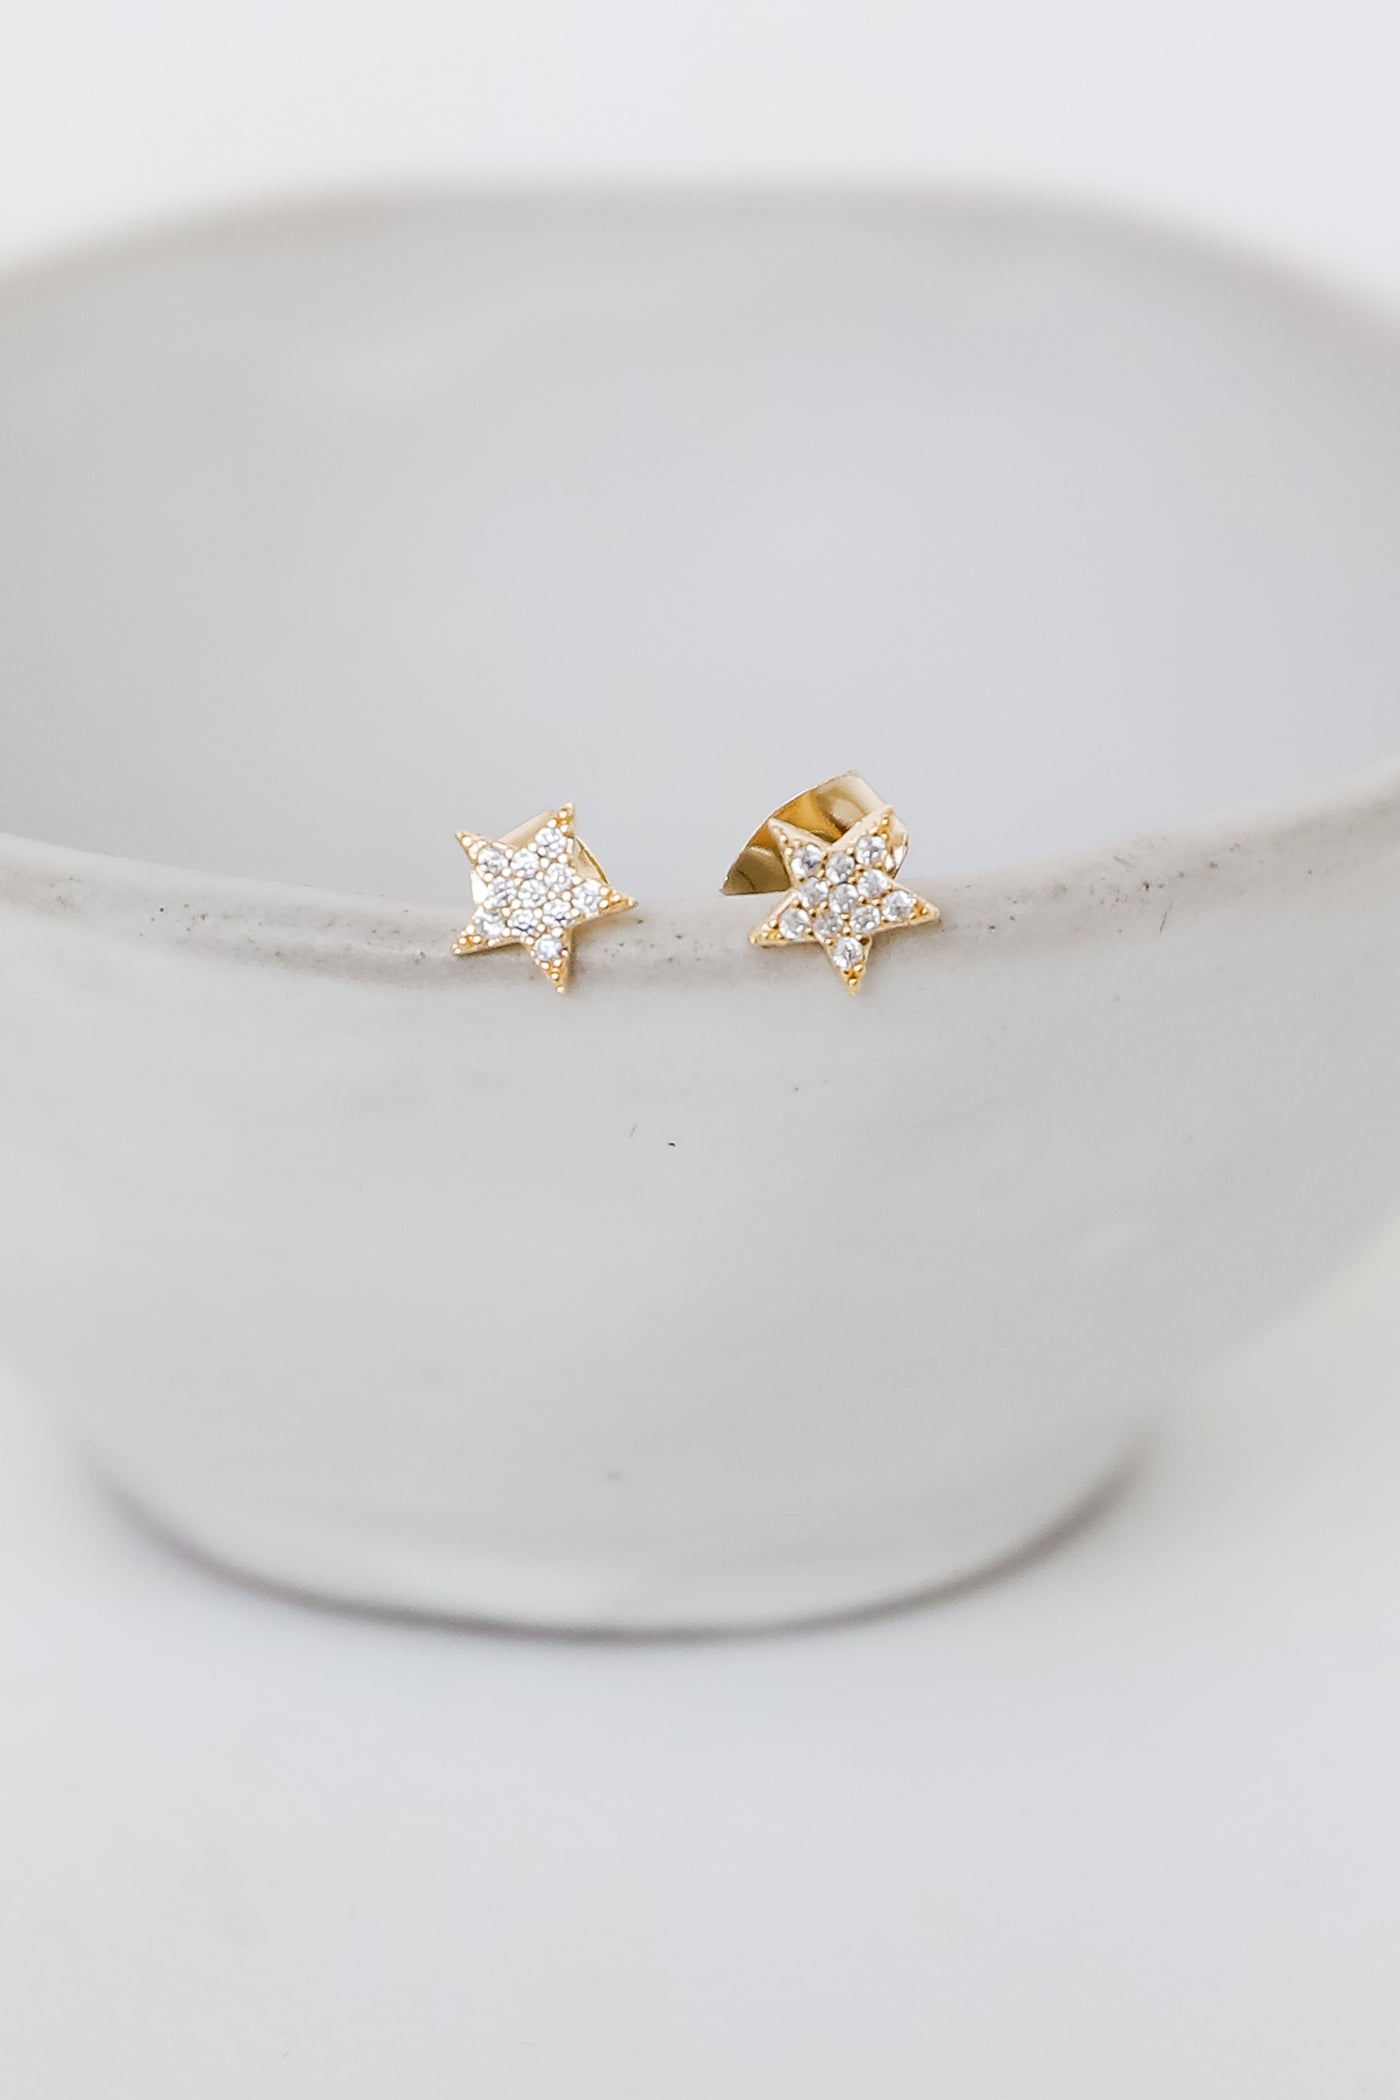 Gold Rhinestone Star Stud Earrings close up